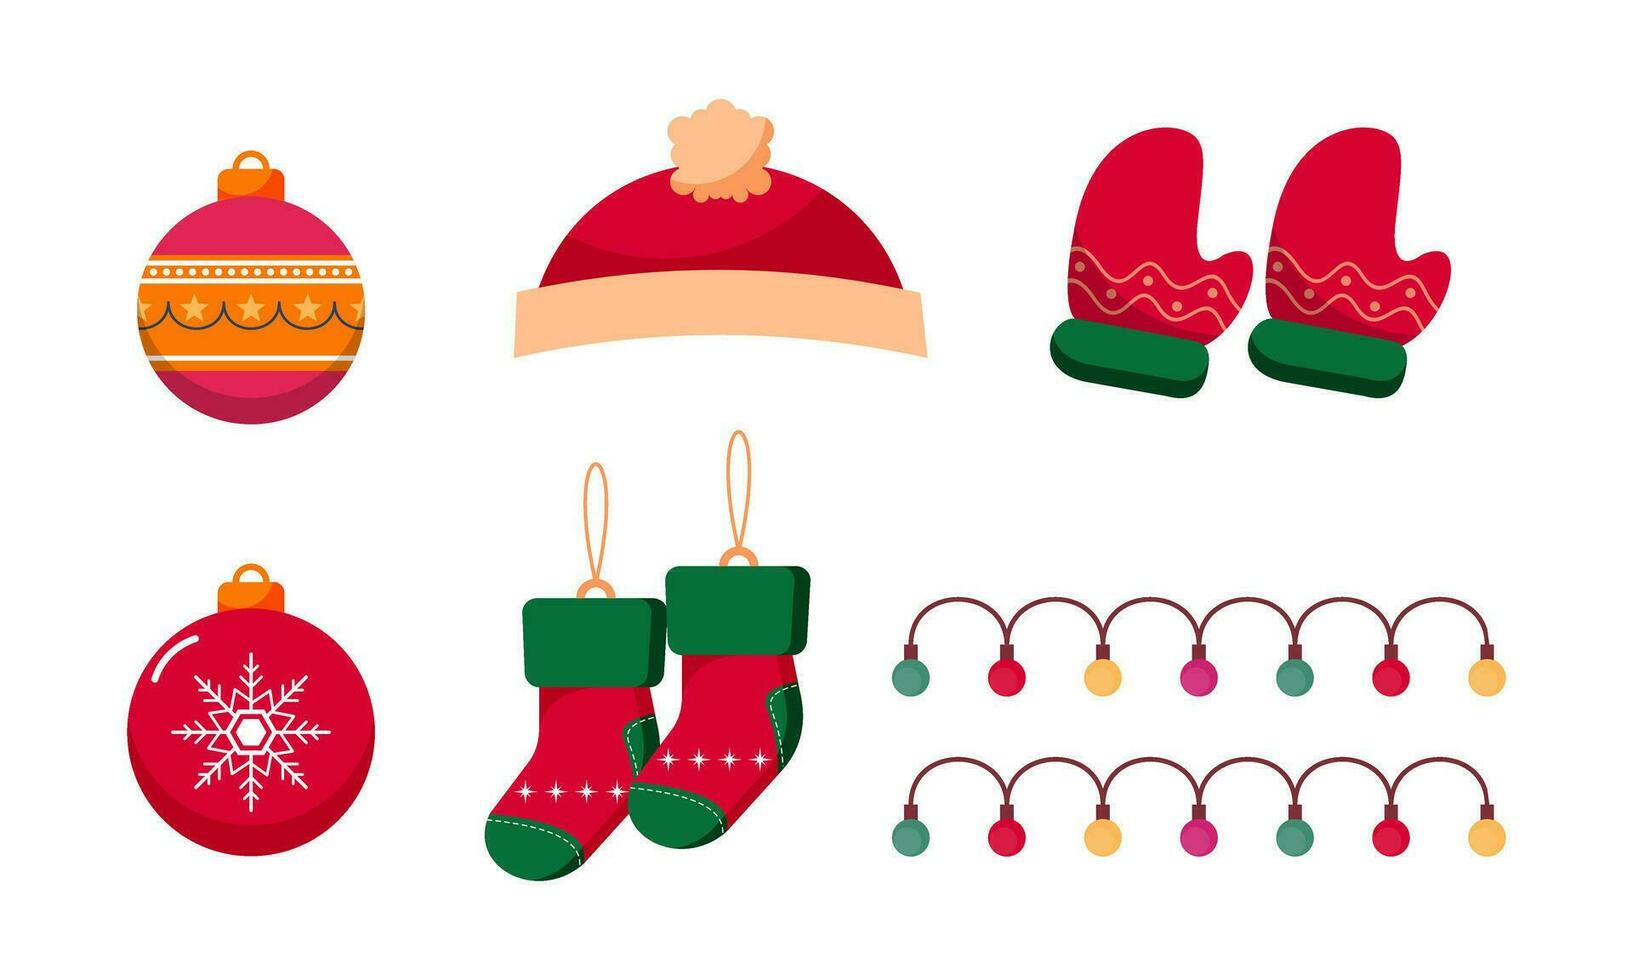 Merry Christmas cute modern minimalist style elements vector